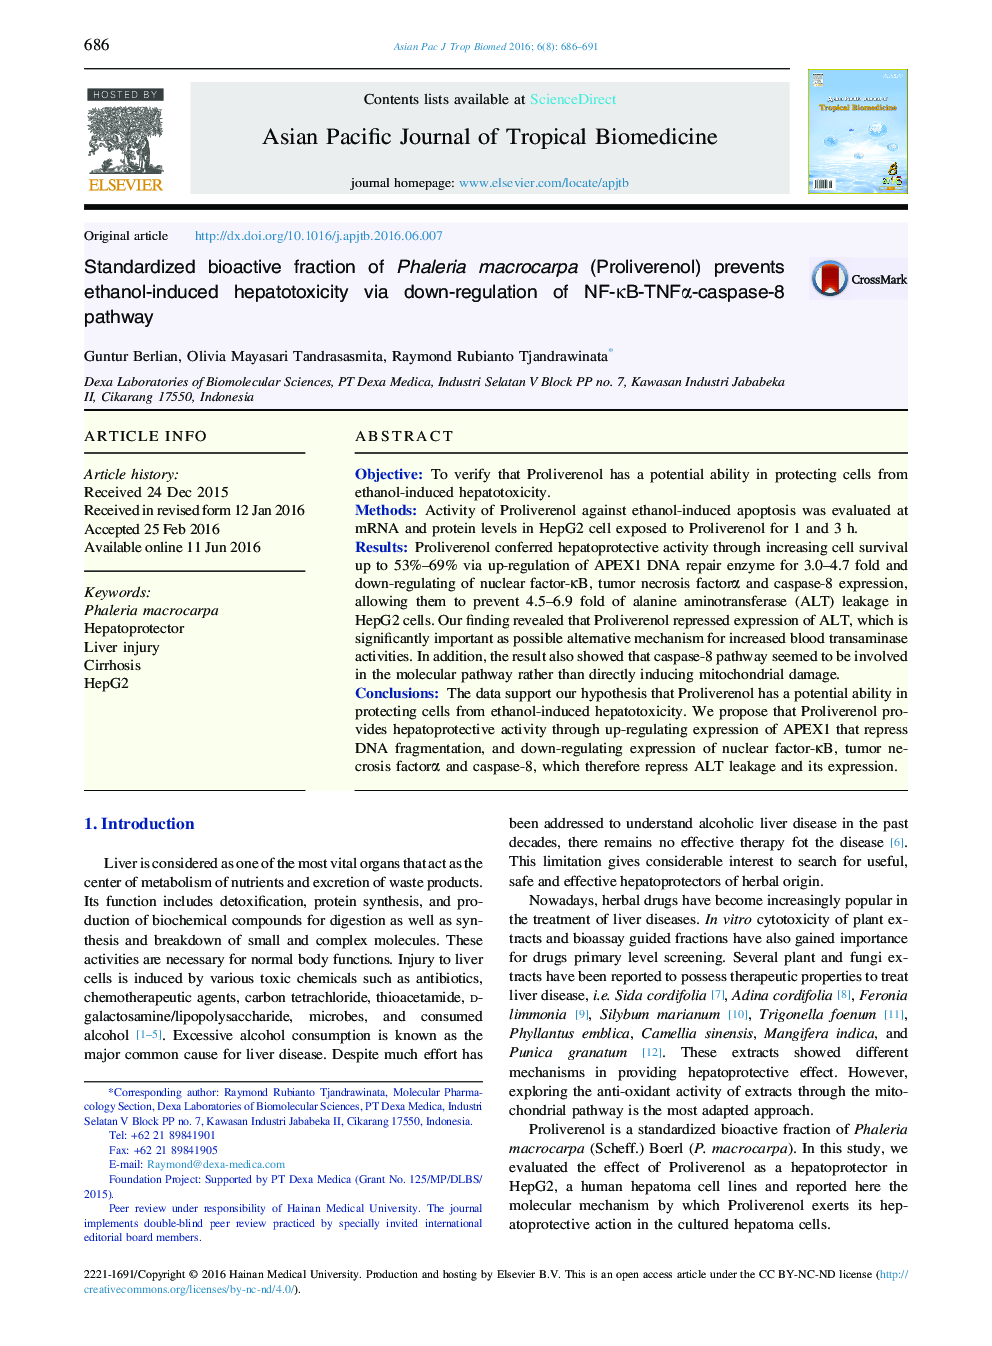 Standardized bioactive fraction of Phaleria macrocarpa (Proliverenol) prevents ethanol-induced hepatotoxicity via down-regulation of NF-κB-TNFα-caspase-8 pathway 